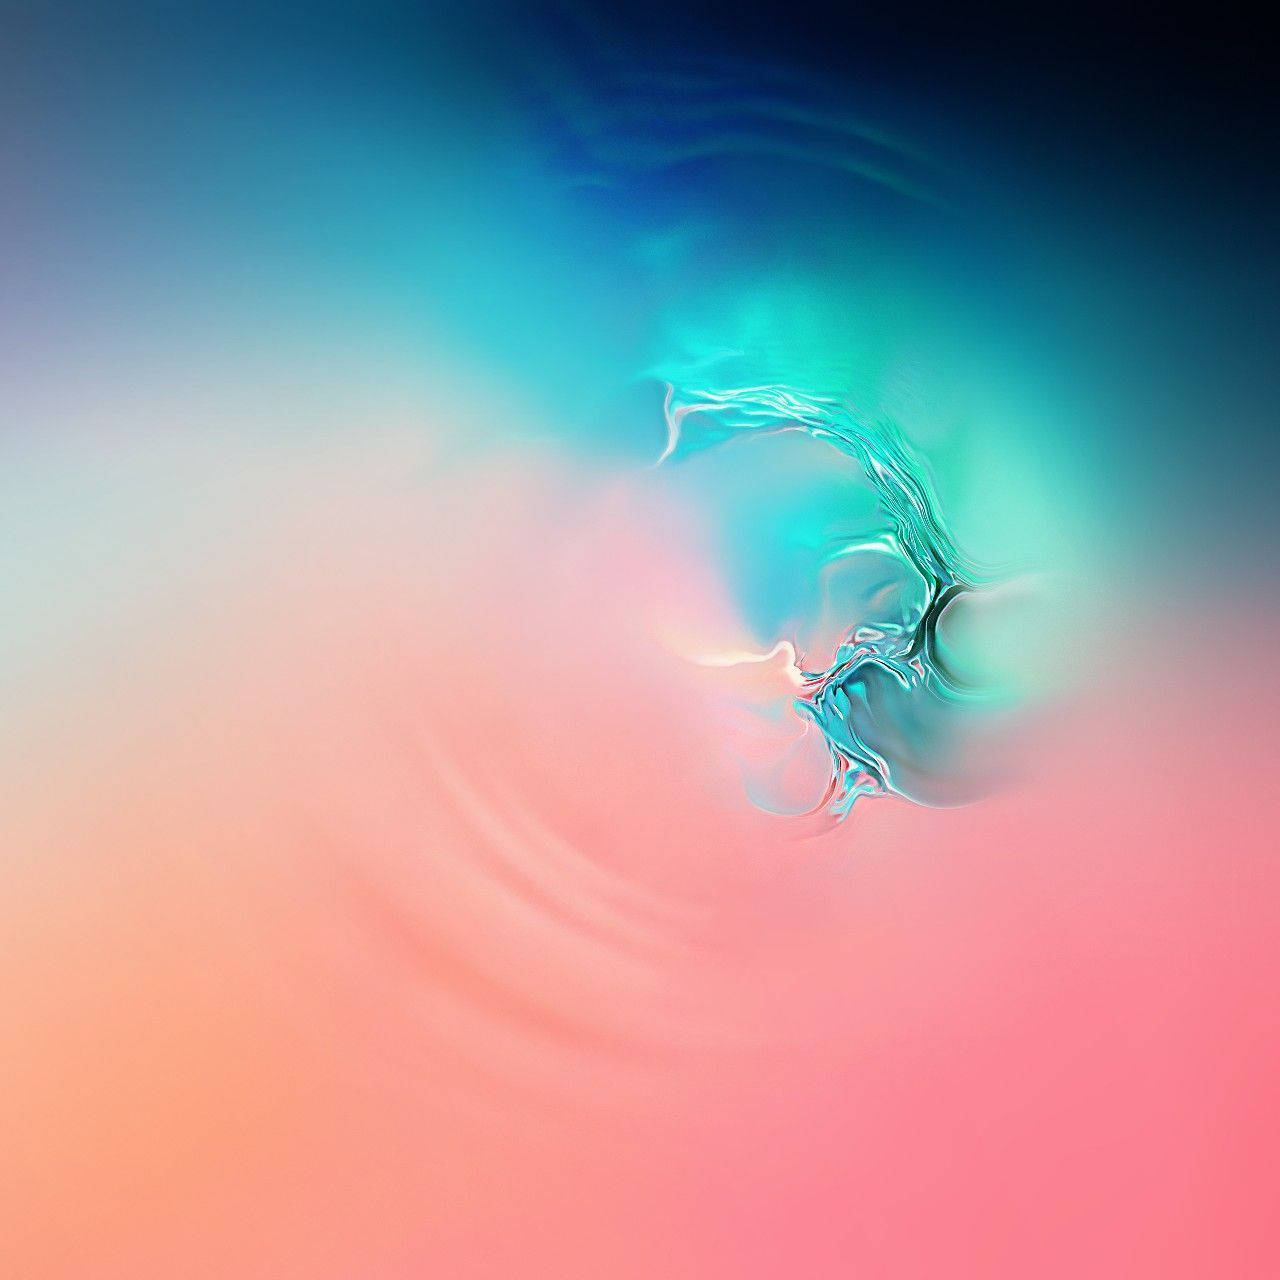 Galaxy S10 Swirled Pink Blue Background